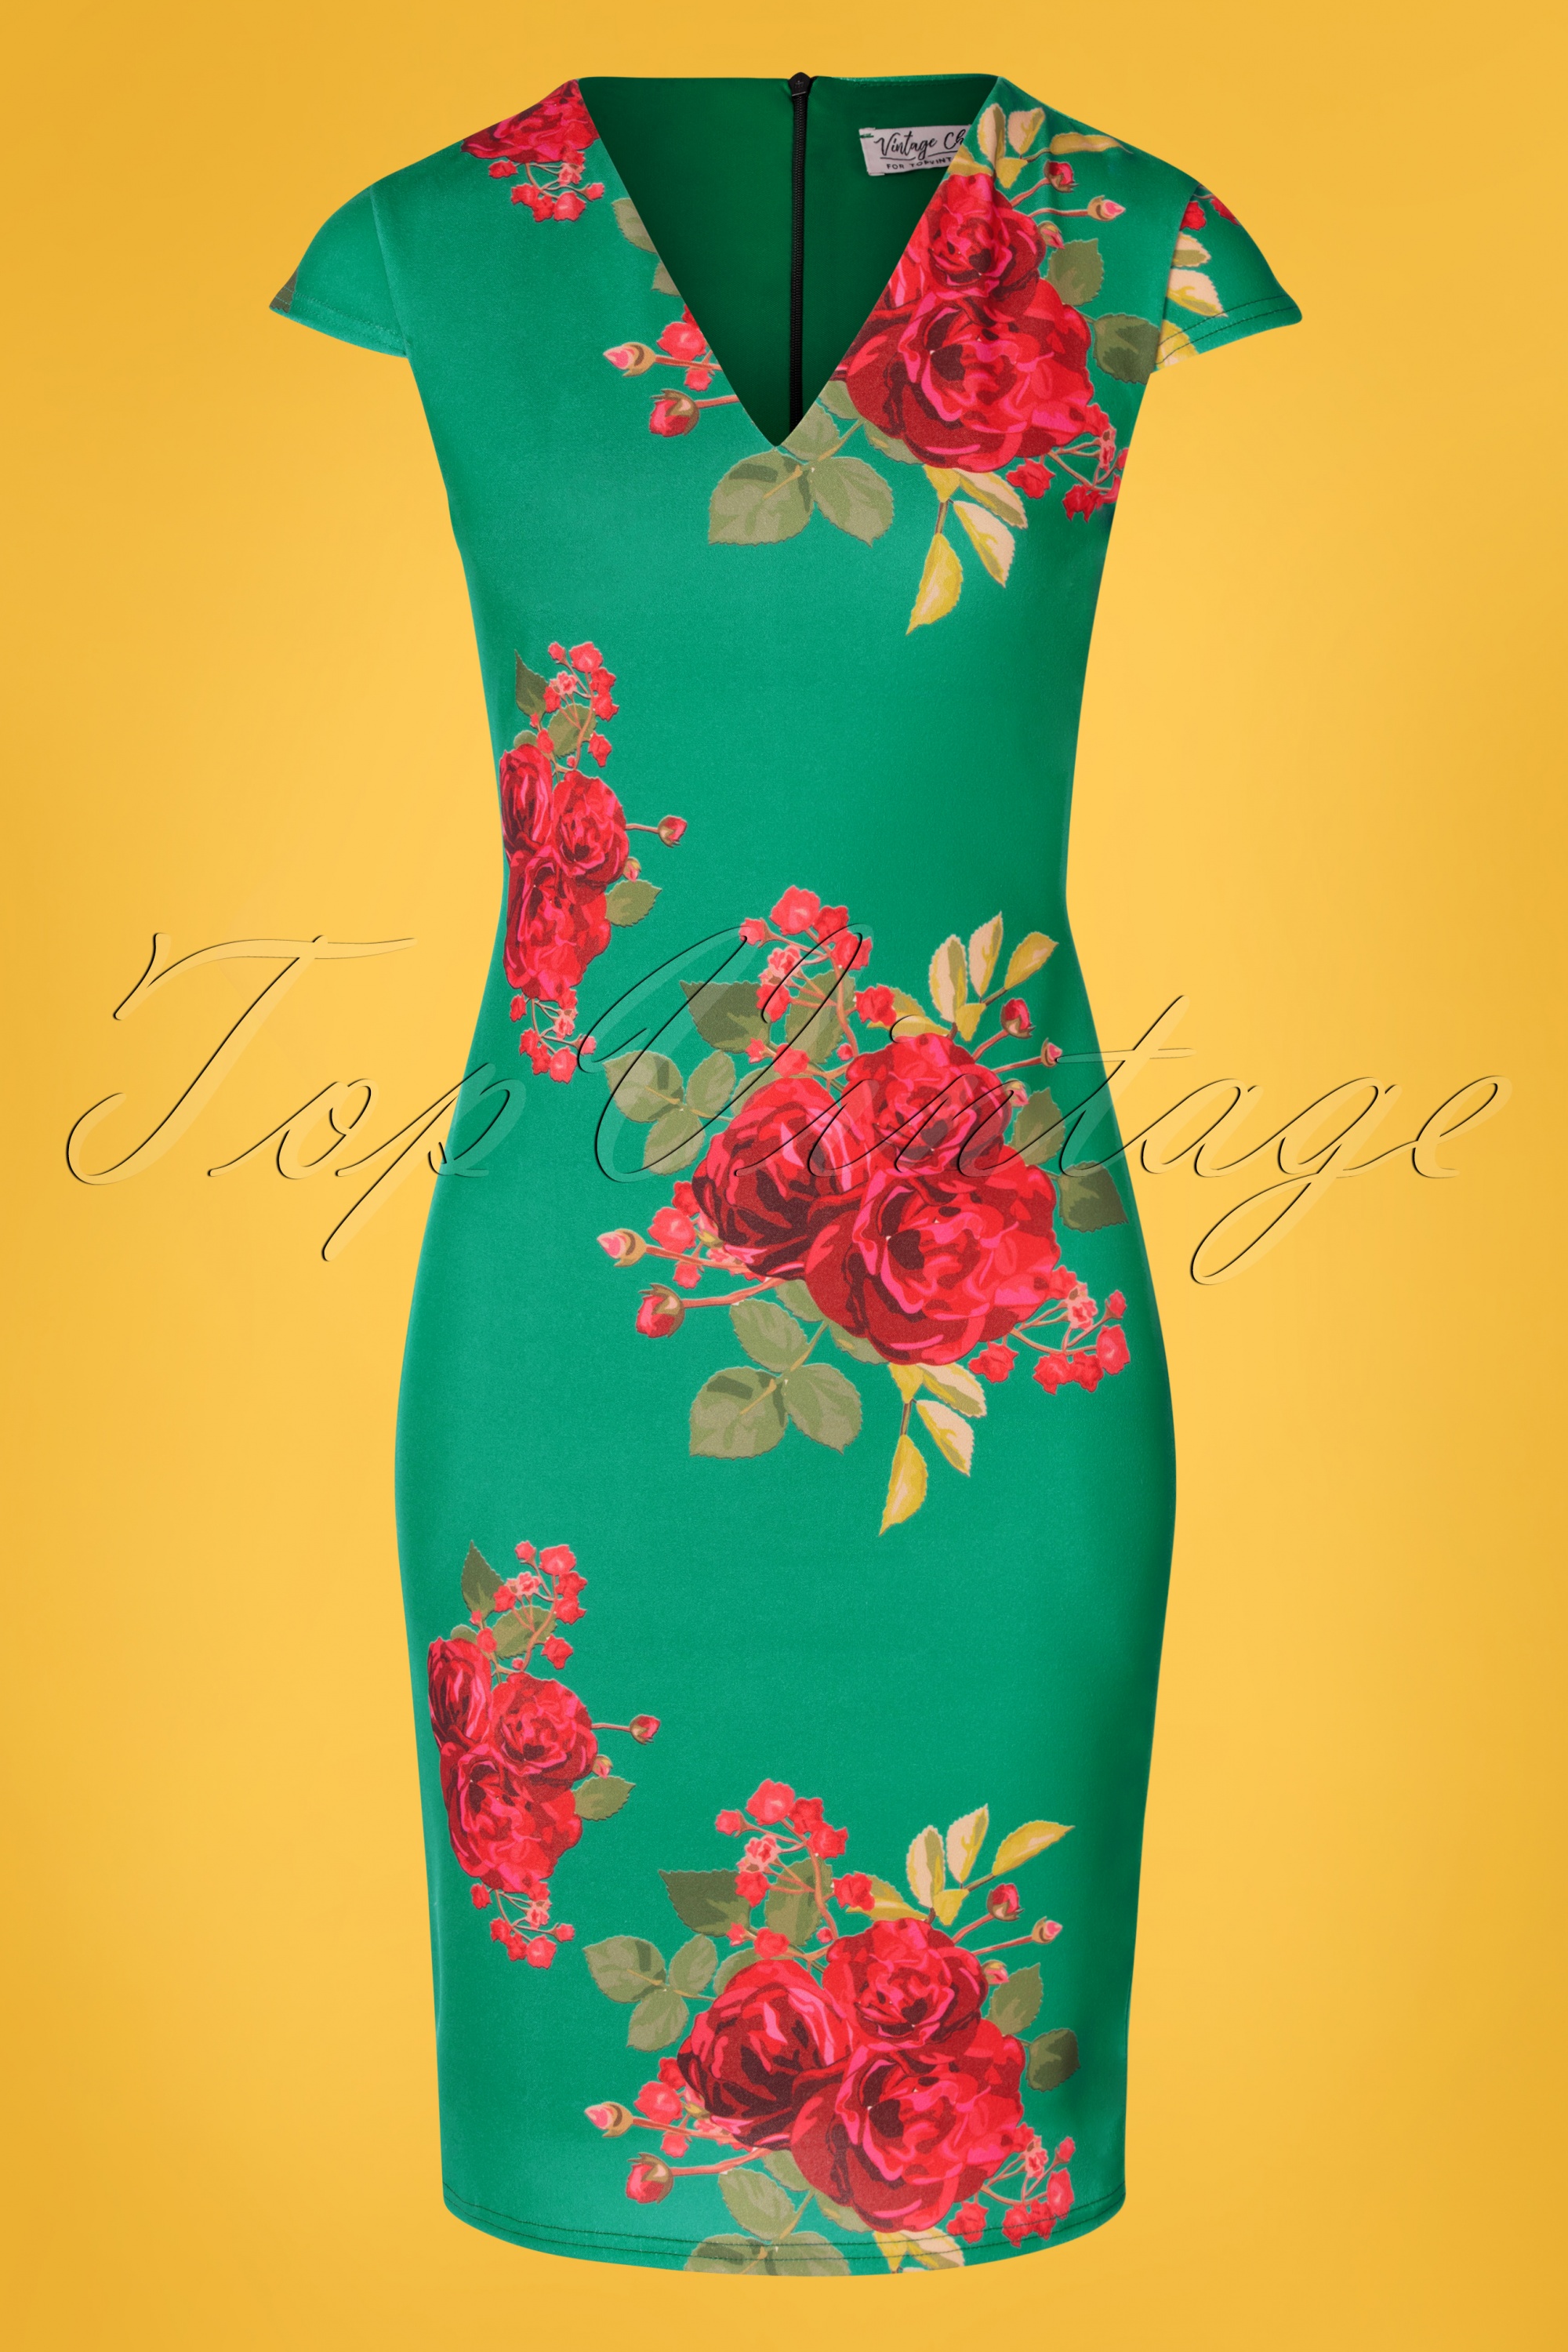 Vintage Chic for Topvintage - Lynda bloemenpenciljurk in smaragdgroen